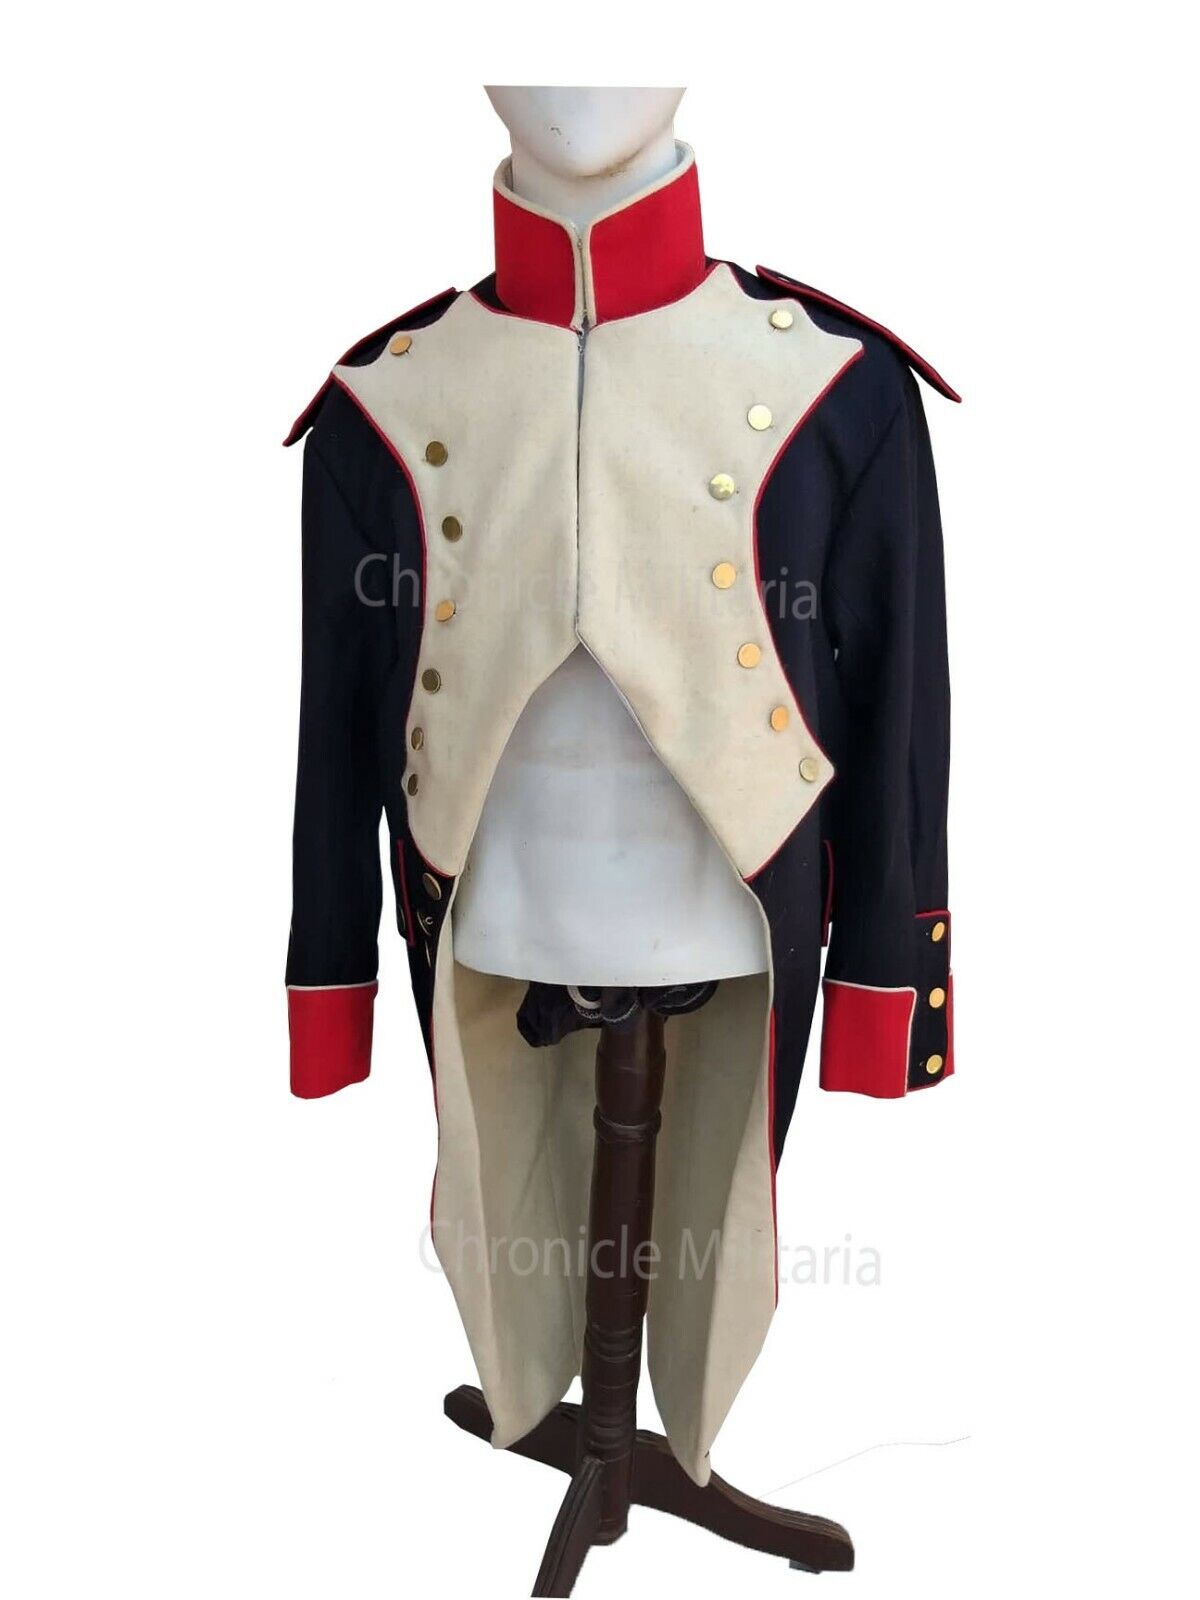 Nepoleonic infantry/Artillery jacket, French reproduction uniform